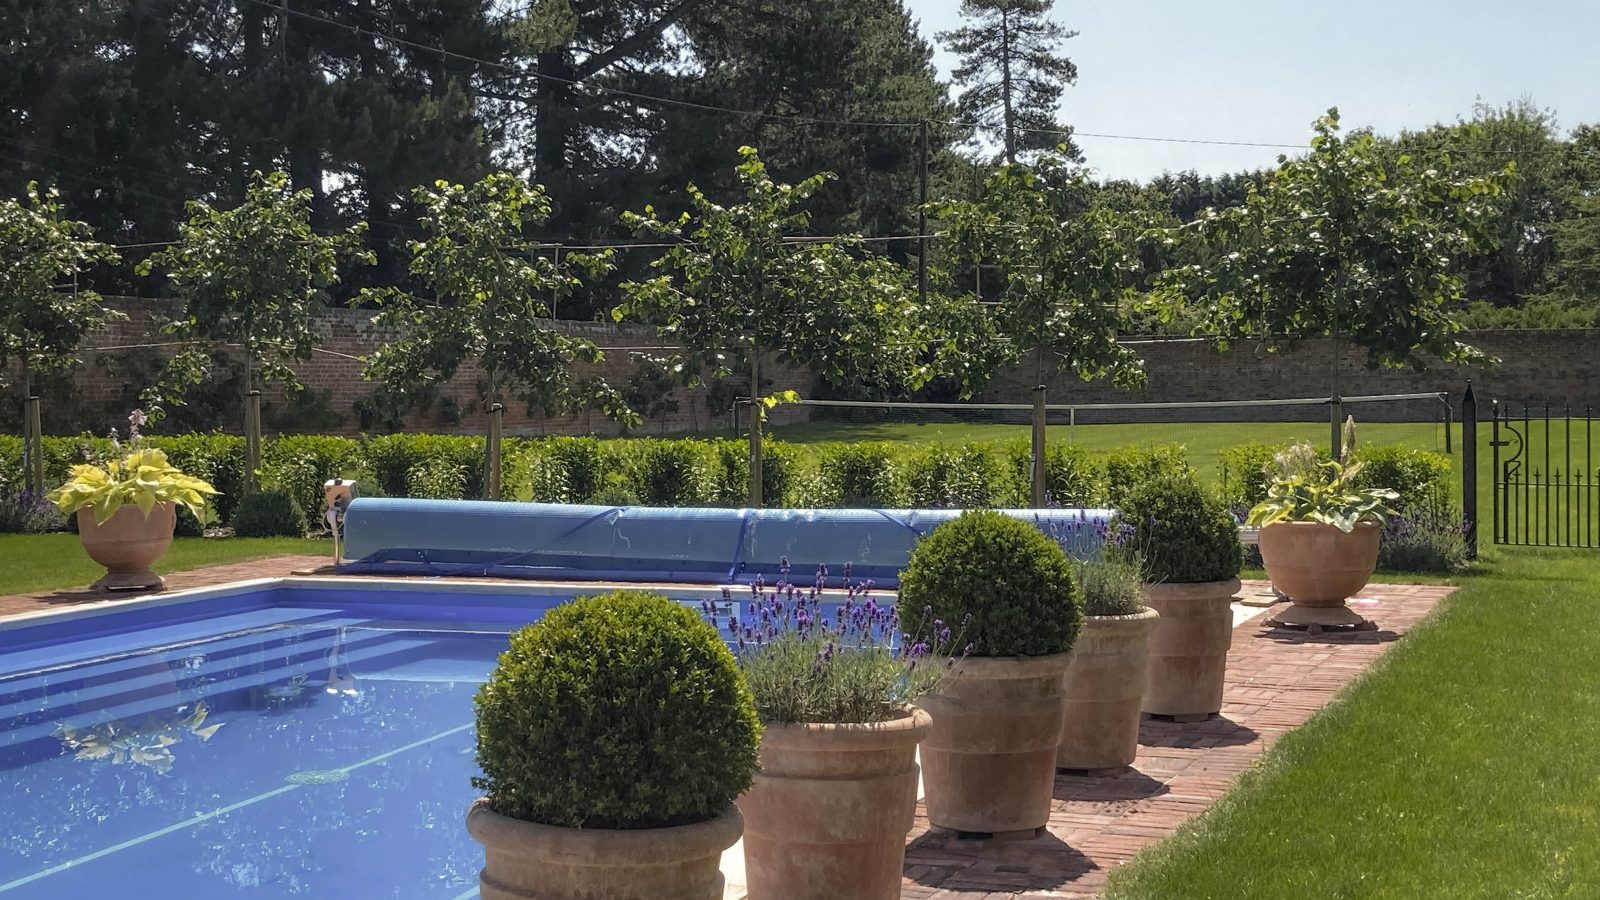 Marlborough Manor swimming pool - kate & tom's Large Holiday Homes